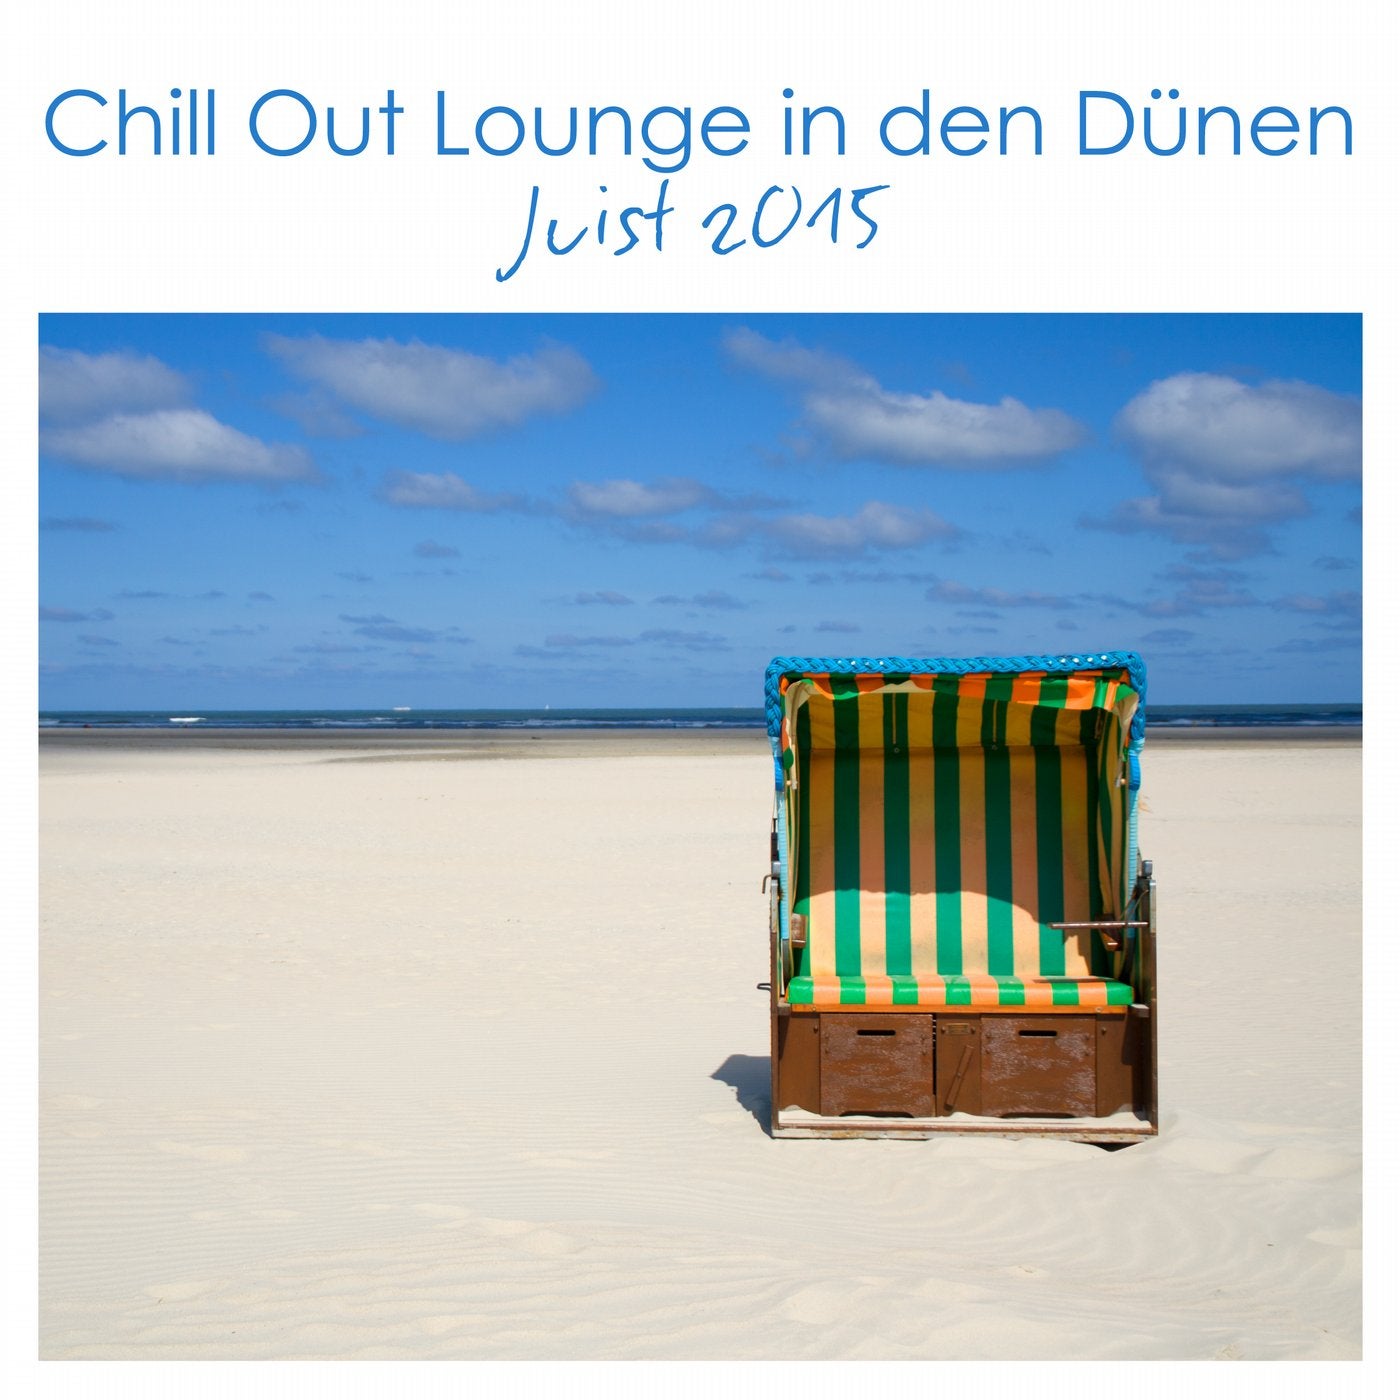 Chill Out Lounge in den Dünen - Juist 2015